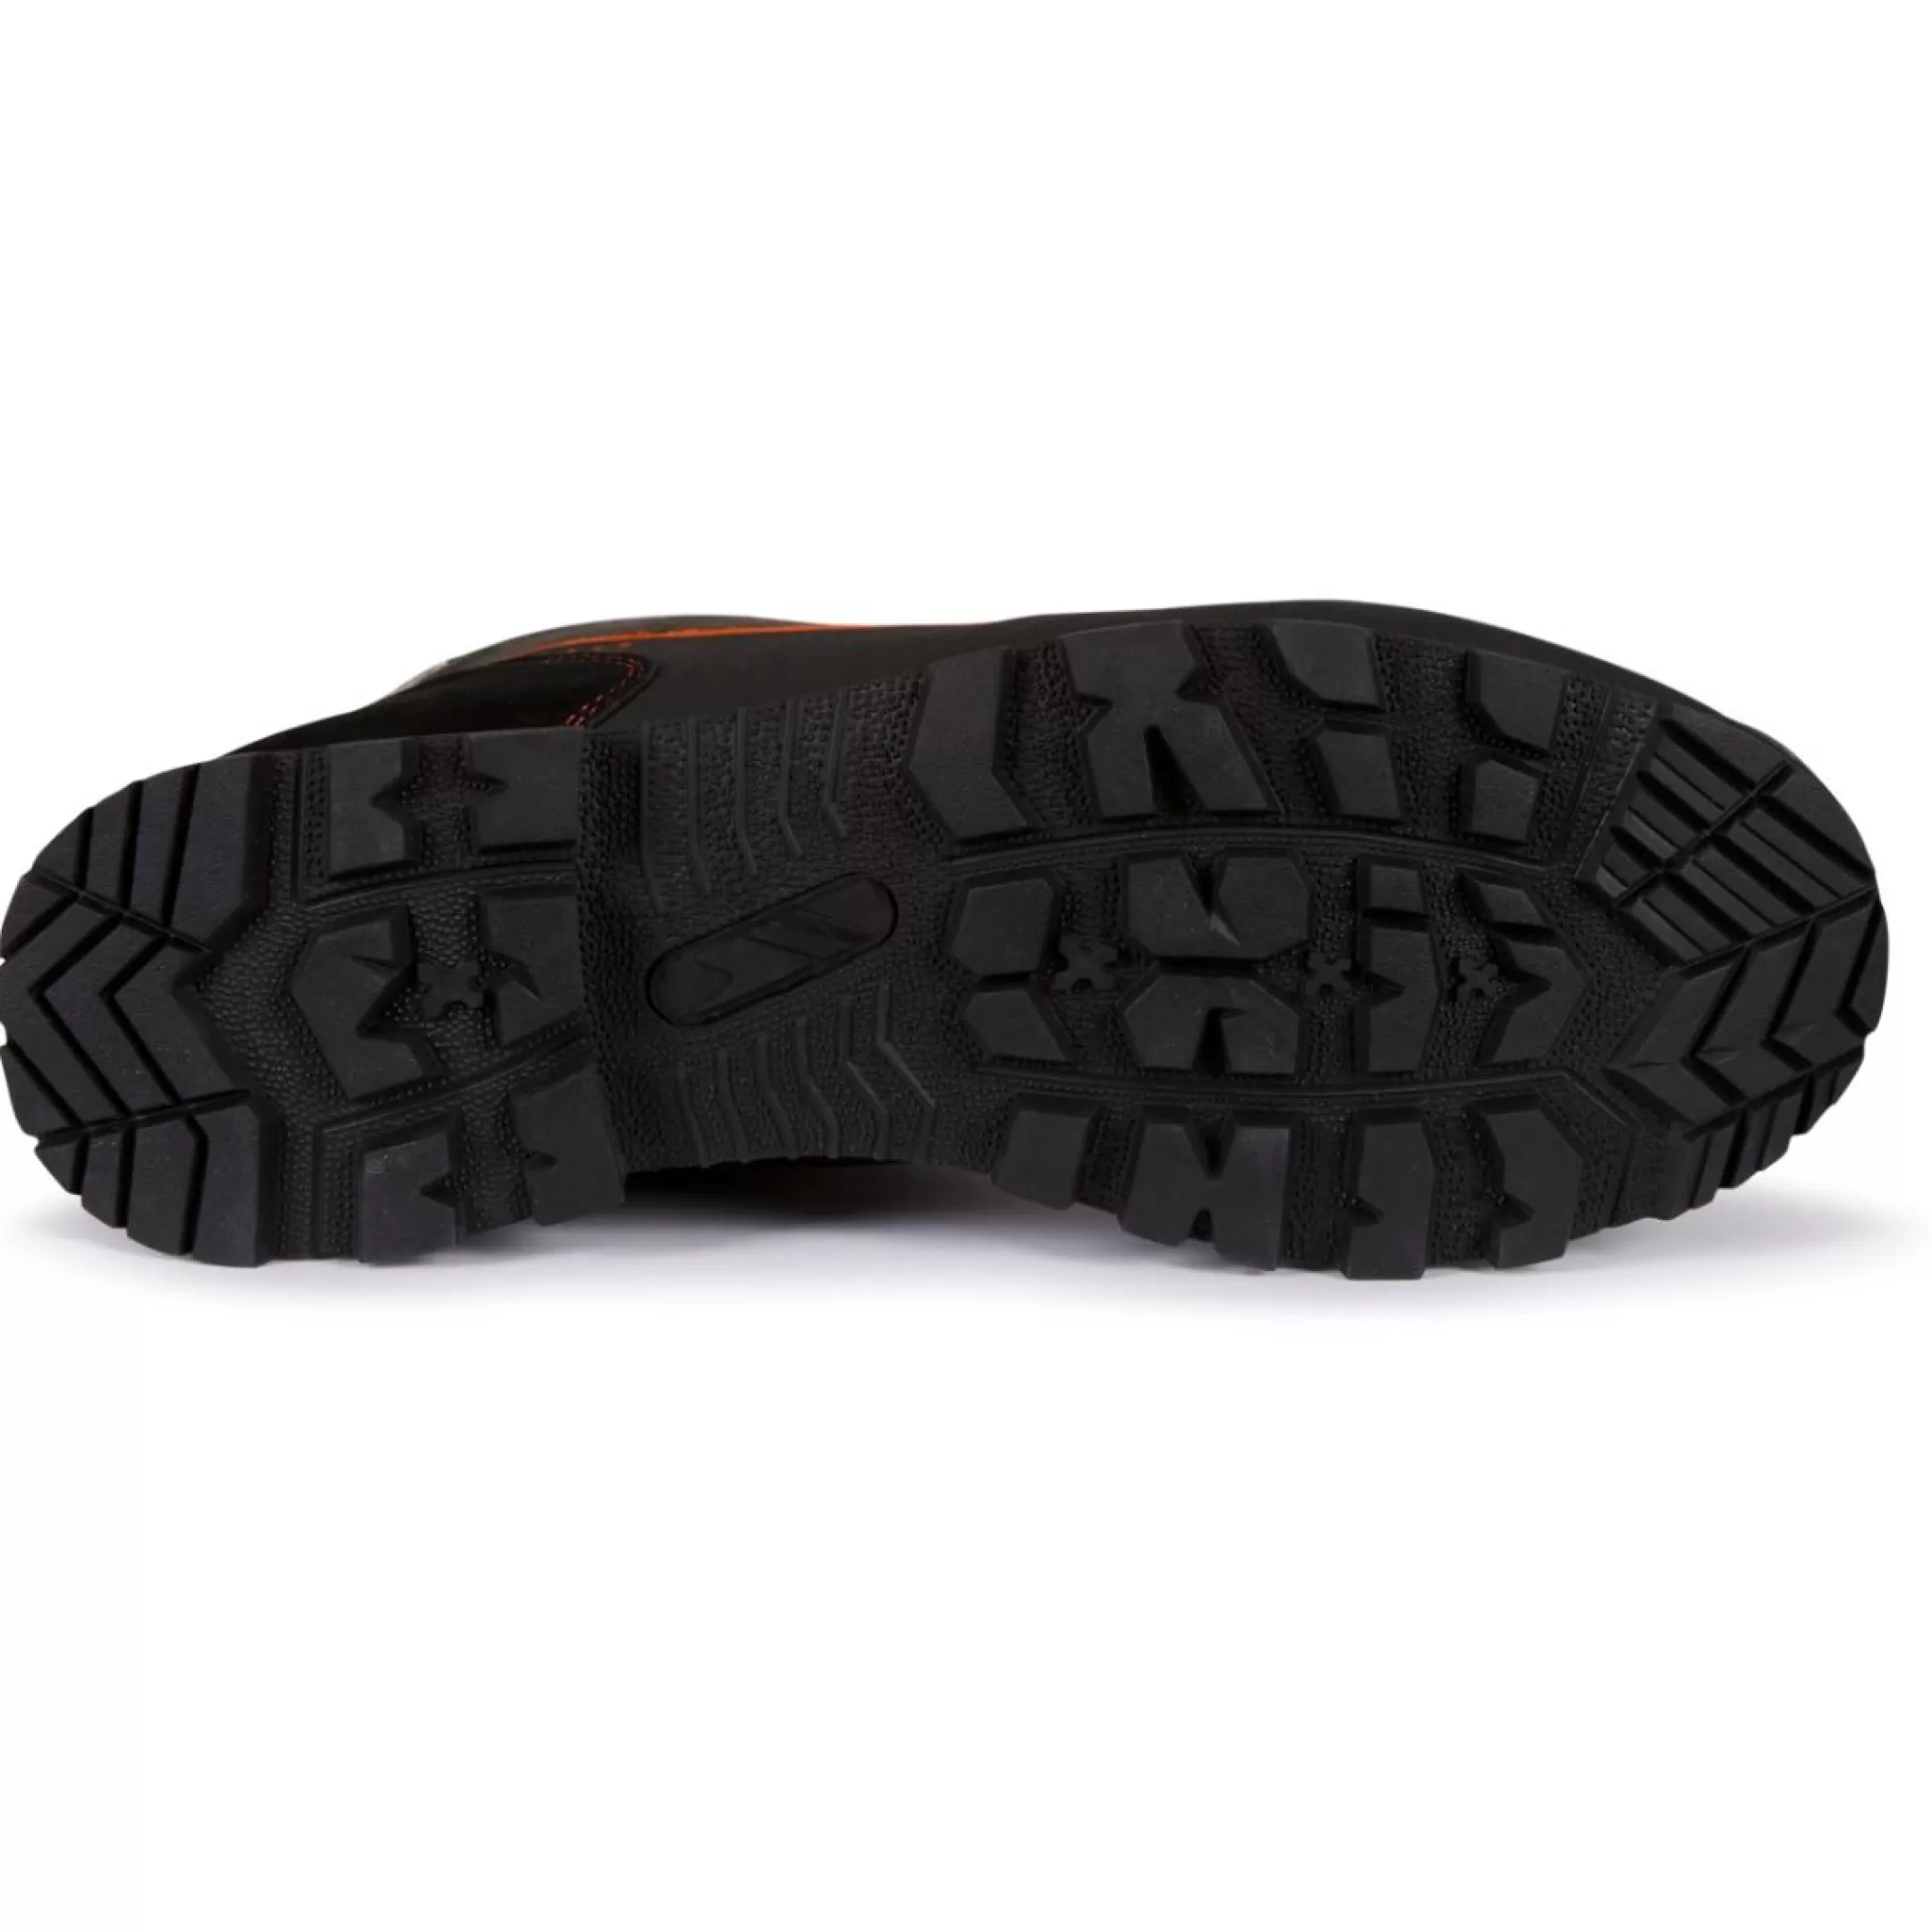 Mens Waterproof Walking Boots Comfortable Mikeba | Trespass Fashion